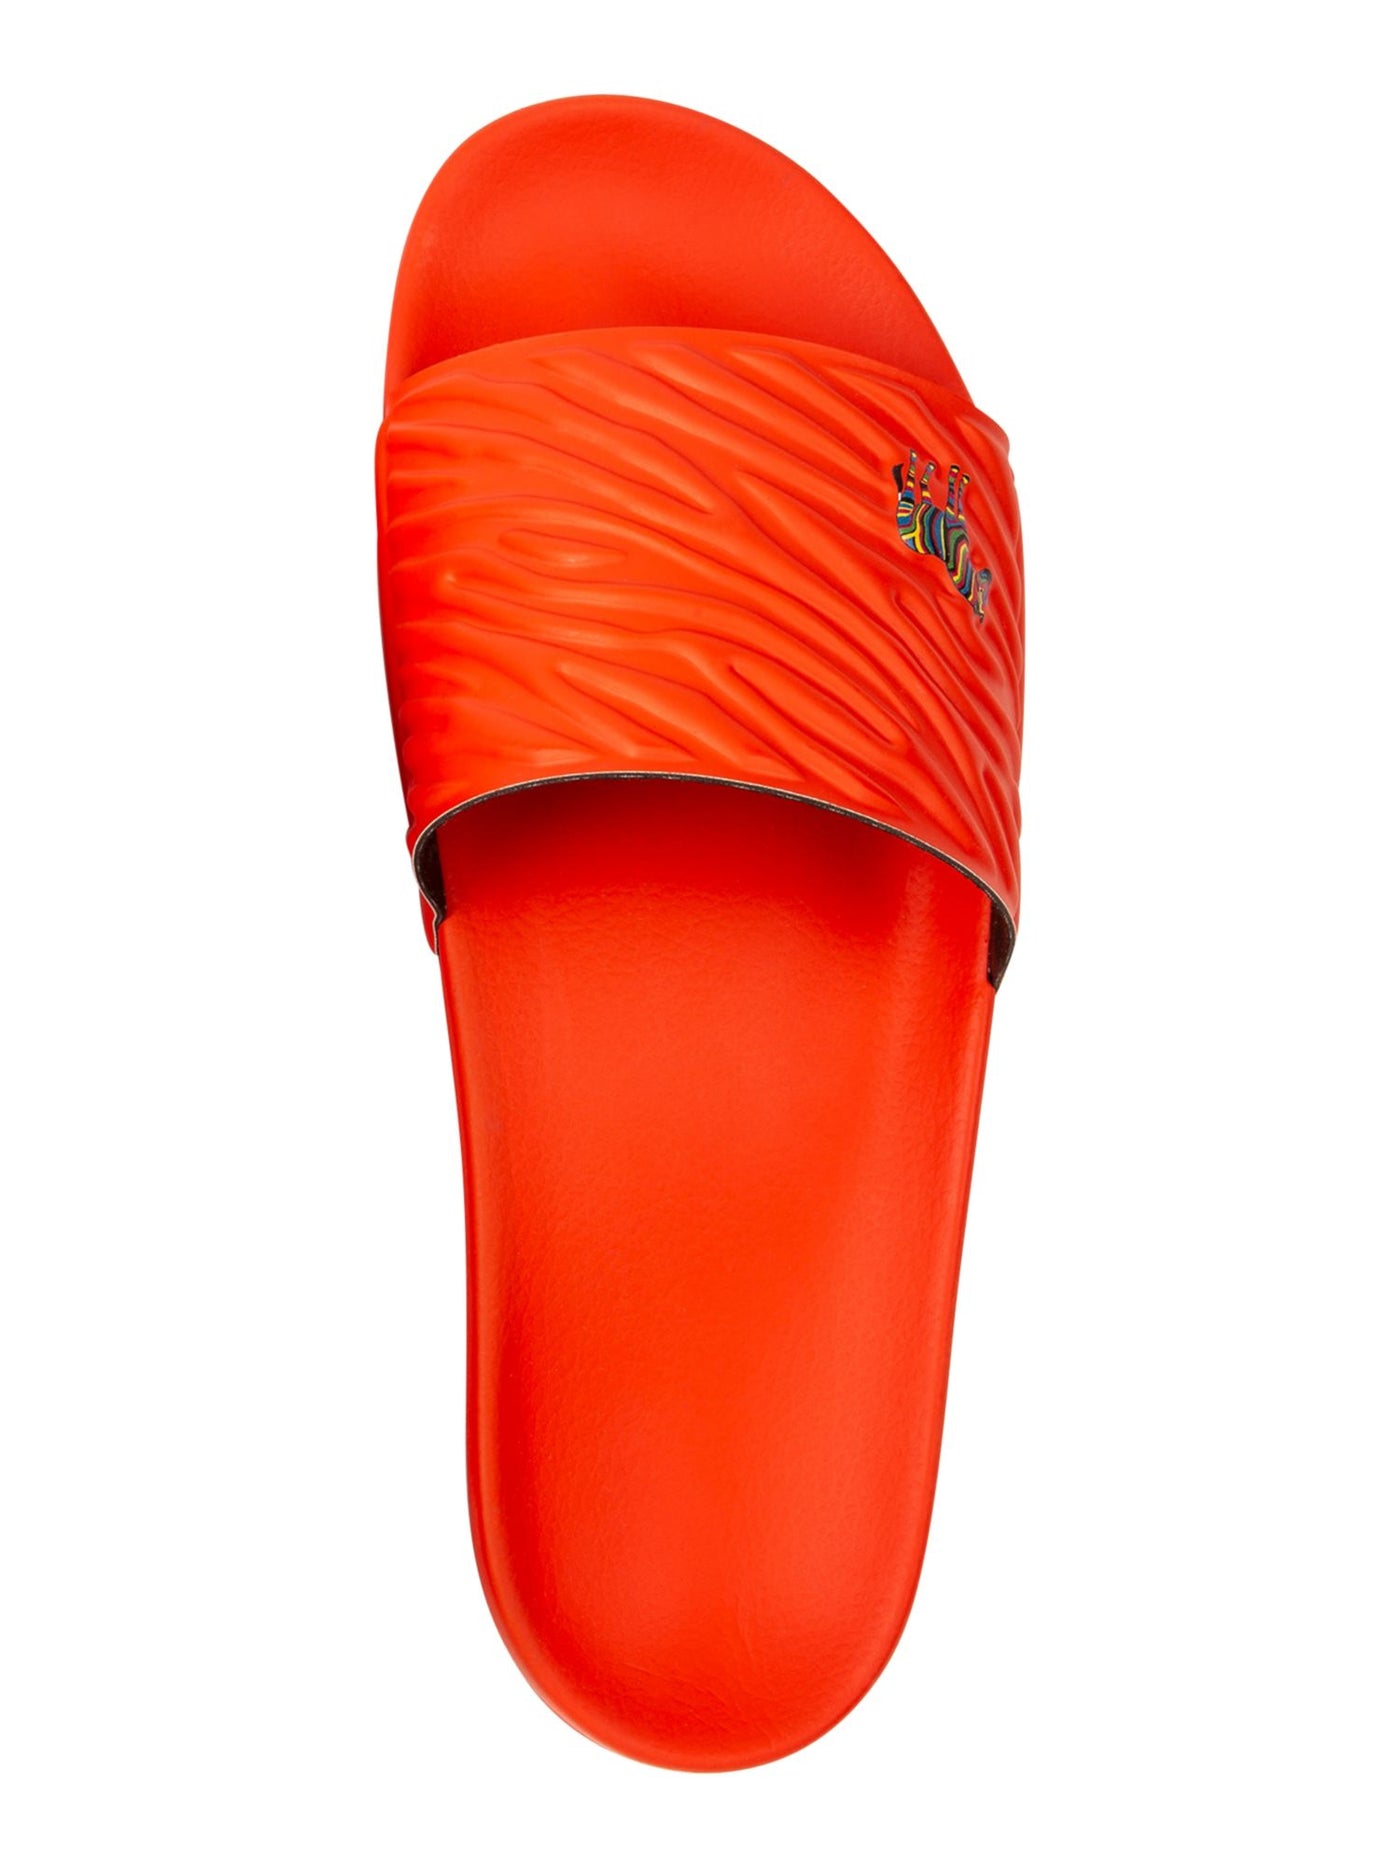 PAUL SMITH Womens Orange Mixed Media Raised Zebra Pattern Comfort Summit Round Toe Slip On Slide Sandals Shoes 46